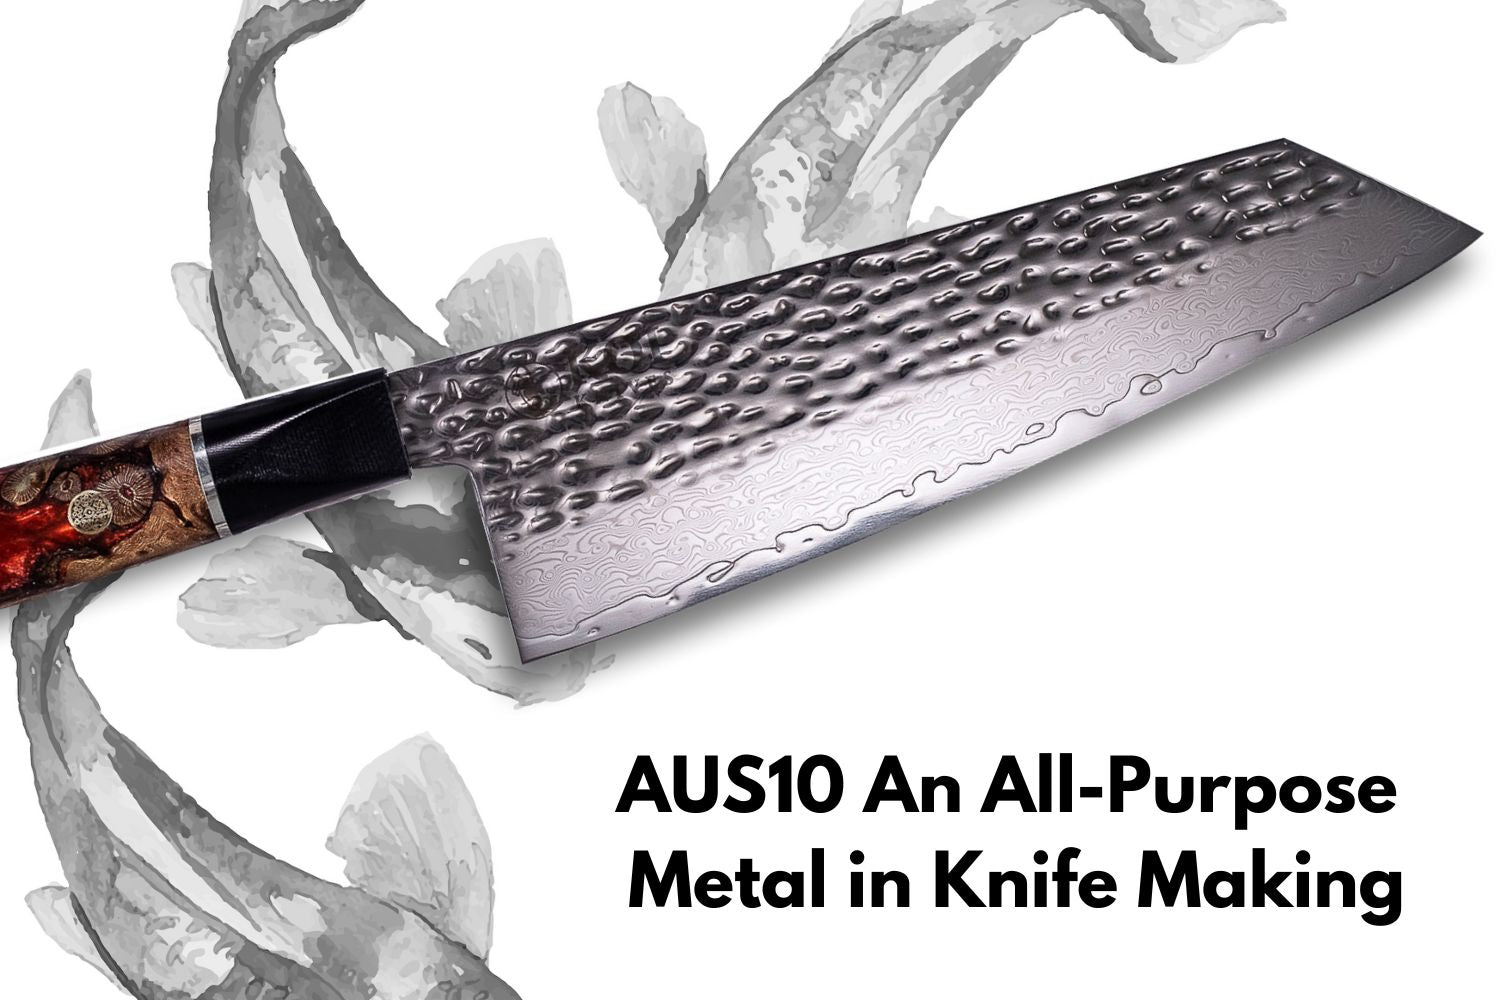 AUS10 An All-Purpose Metal in Knife Making